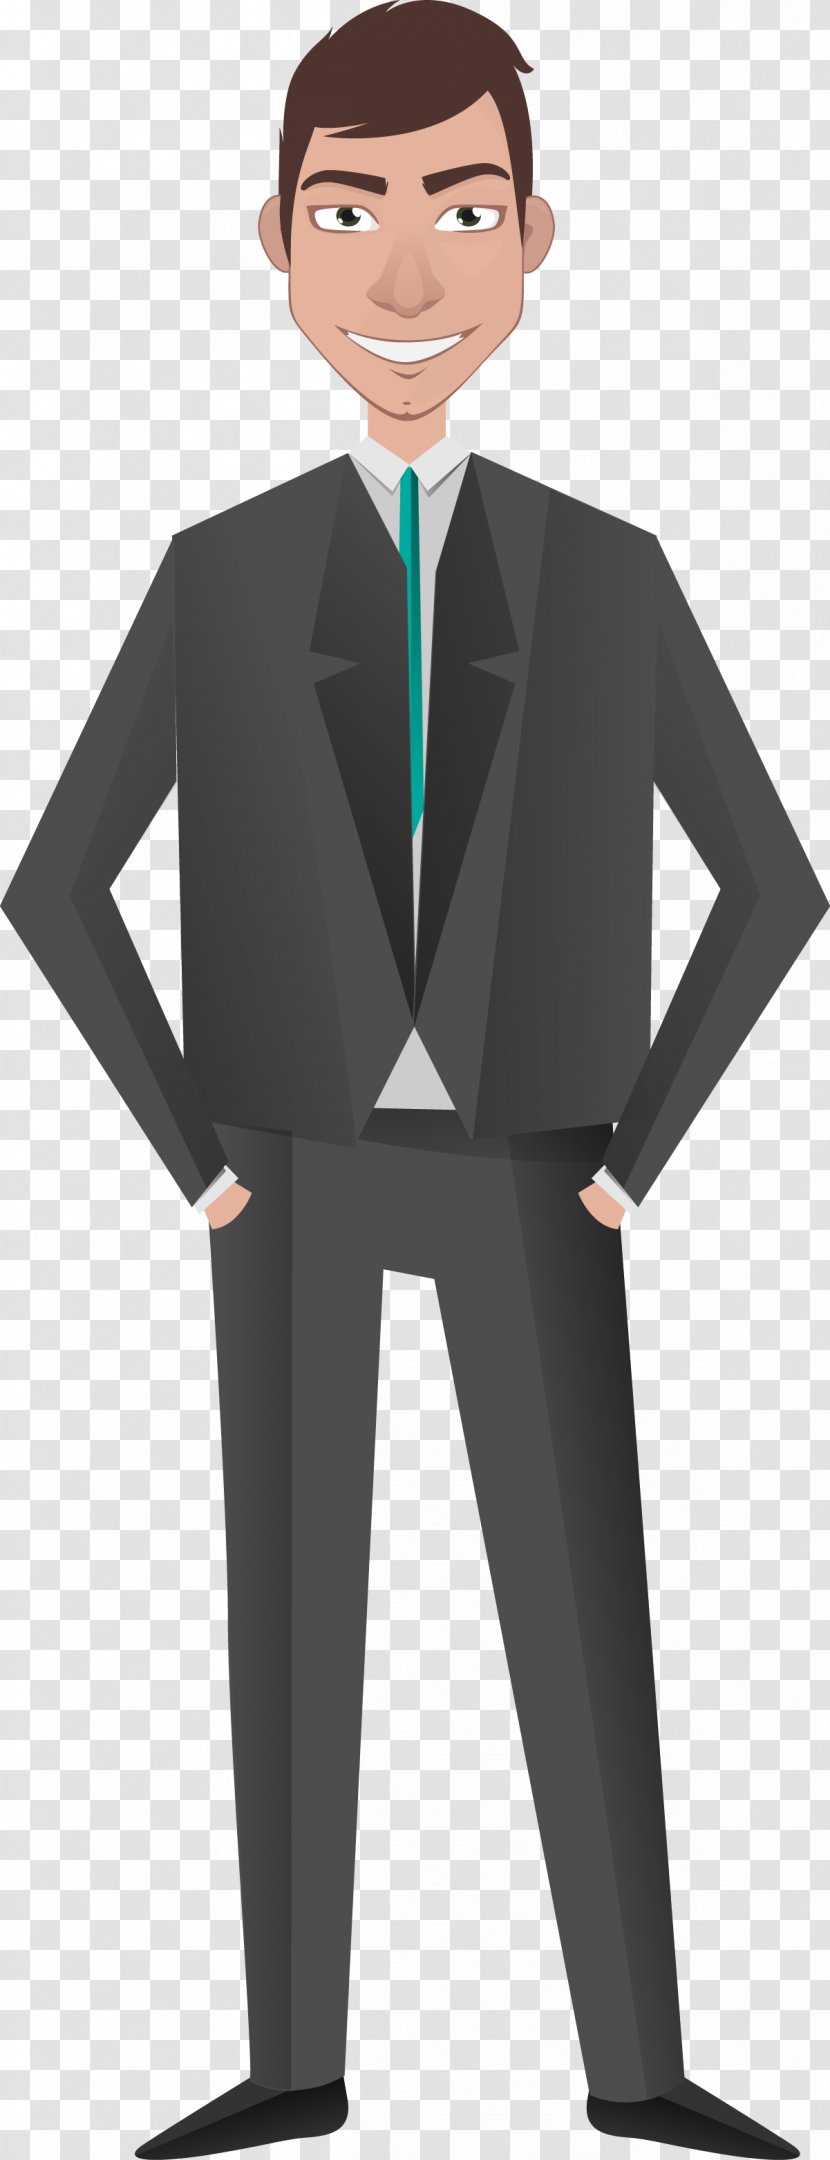 Character Cartoon Illustration - Professional - Smiling Vector Man Figure Transparent PNG